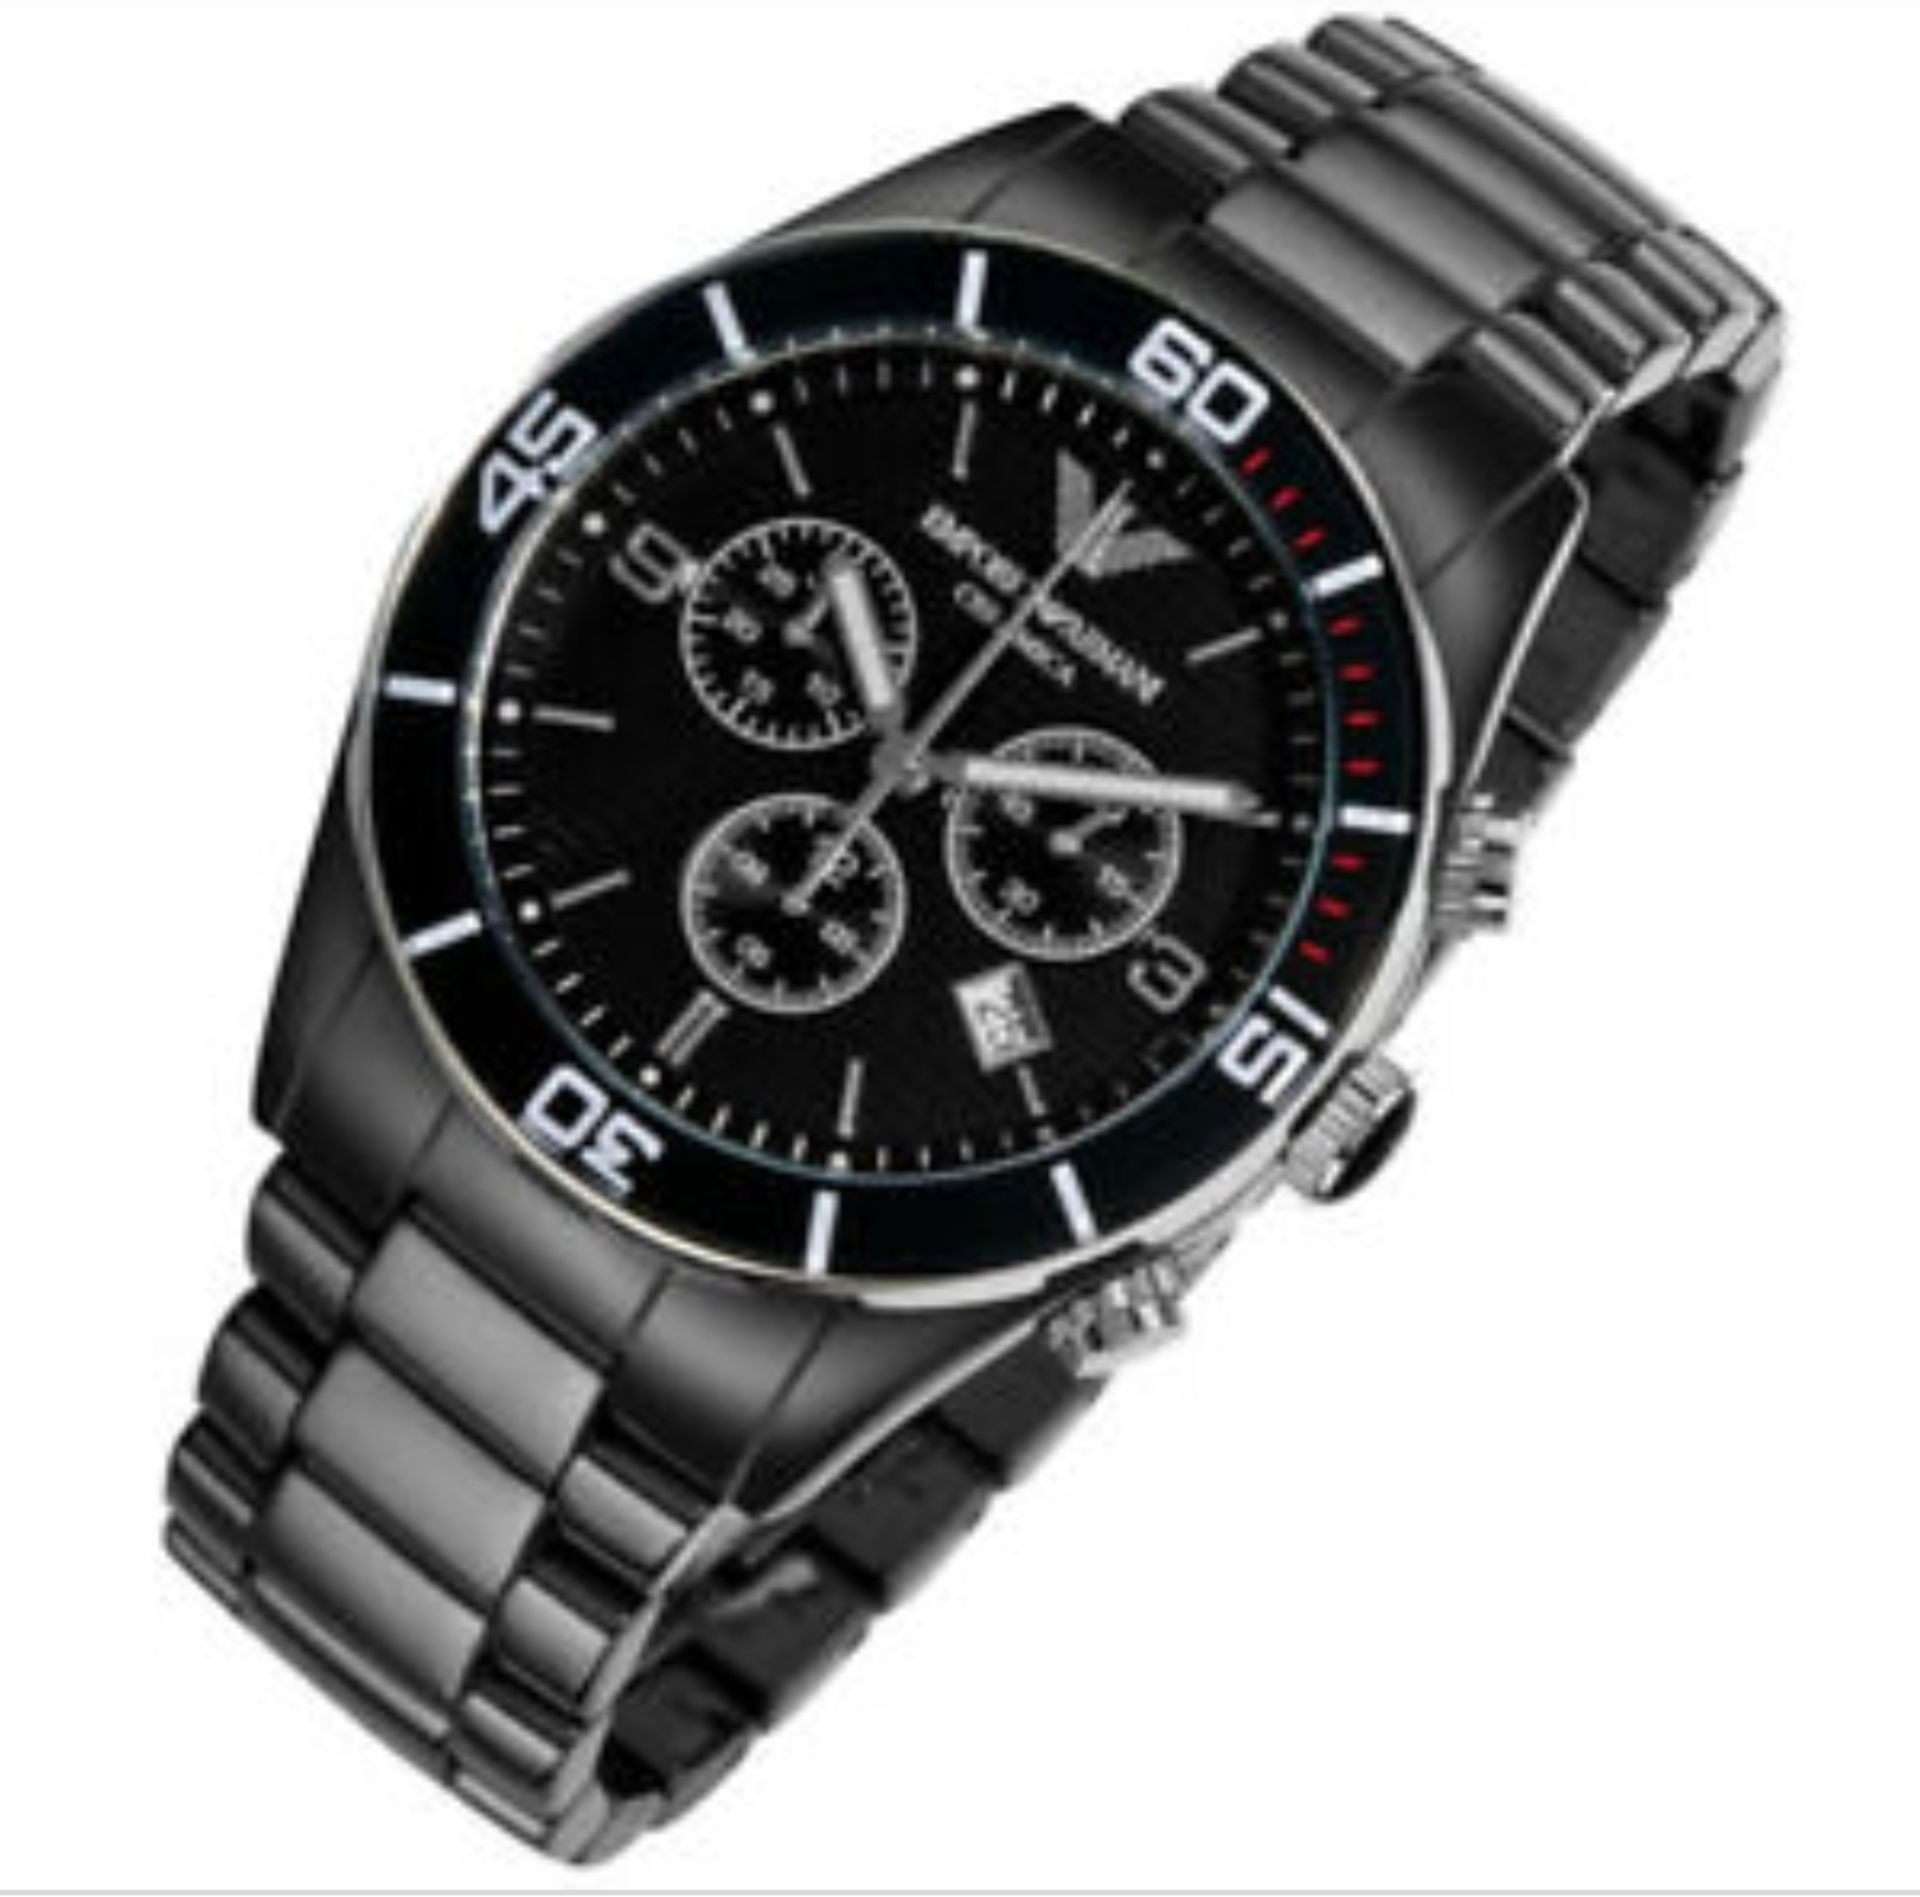 Emporio Armani AR1421 Men's Black Ceramica Chronograph Watch - Image 2 of 6